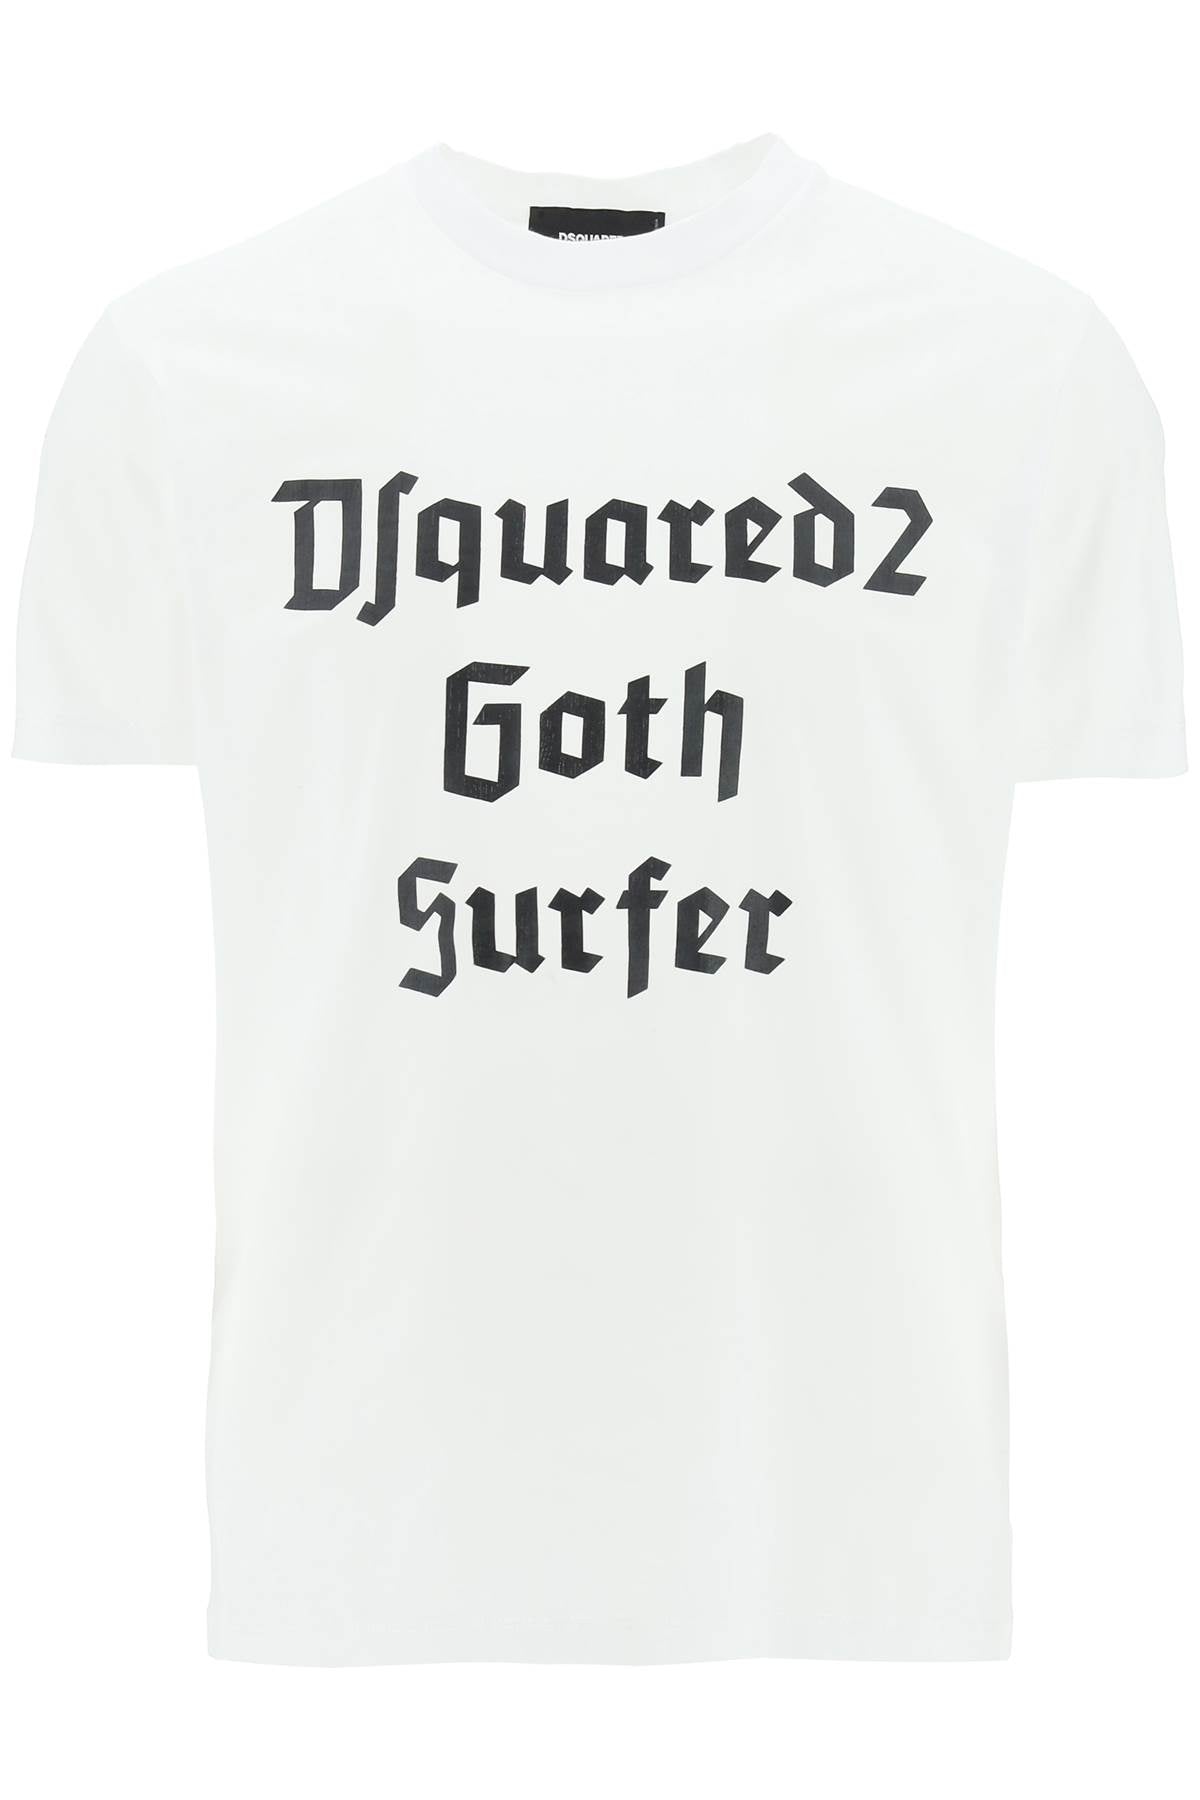 Dsquared2 'd2 goth surfer' t-shirt-0